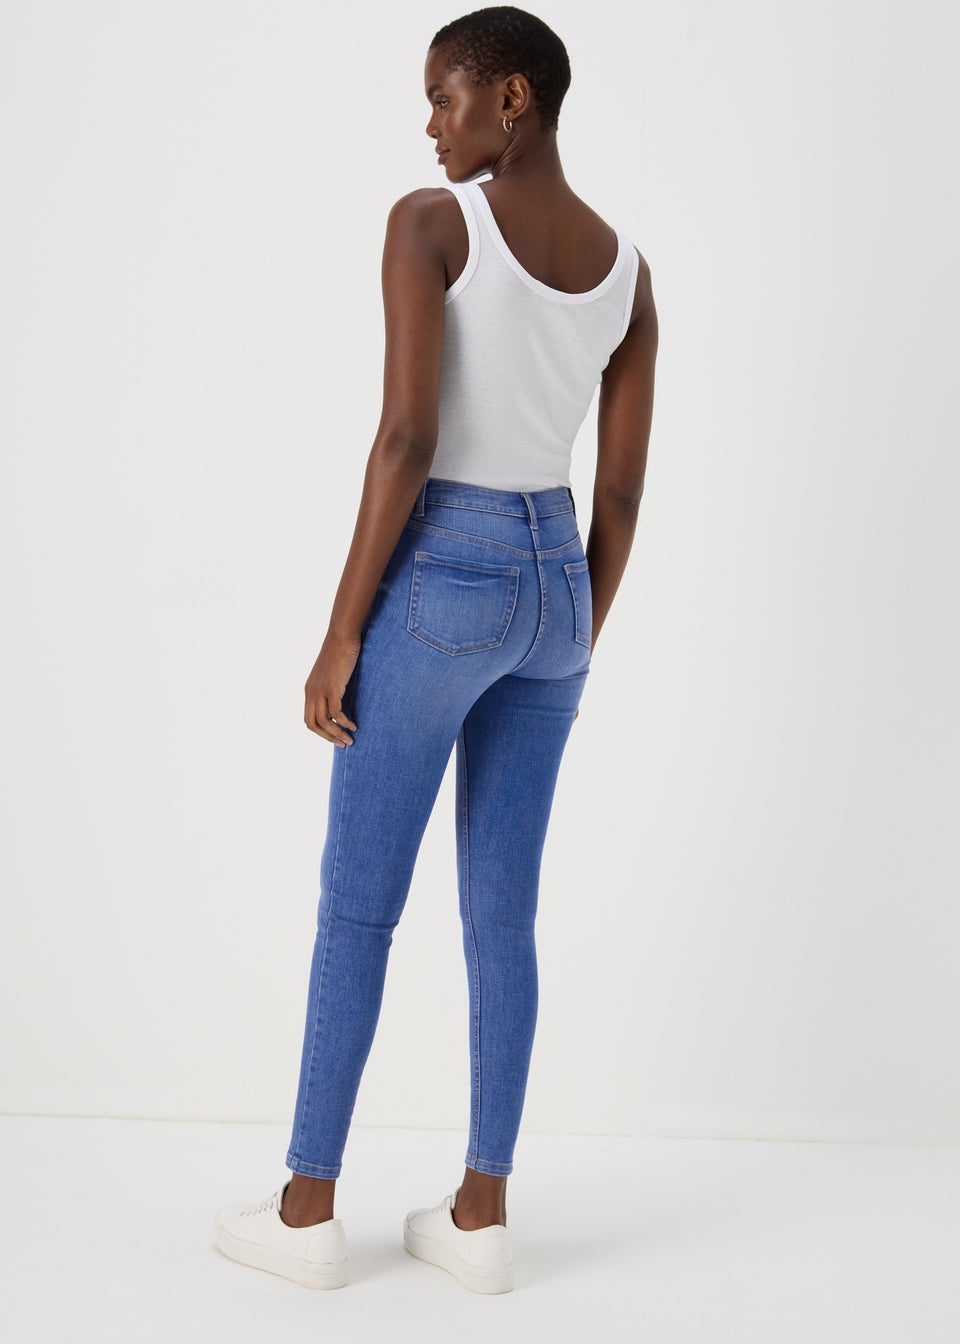 Women's Skinny Jeans | Blue & Black Skinny Jeans - Matalan